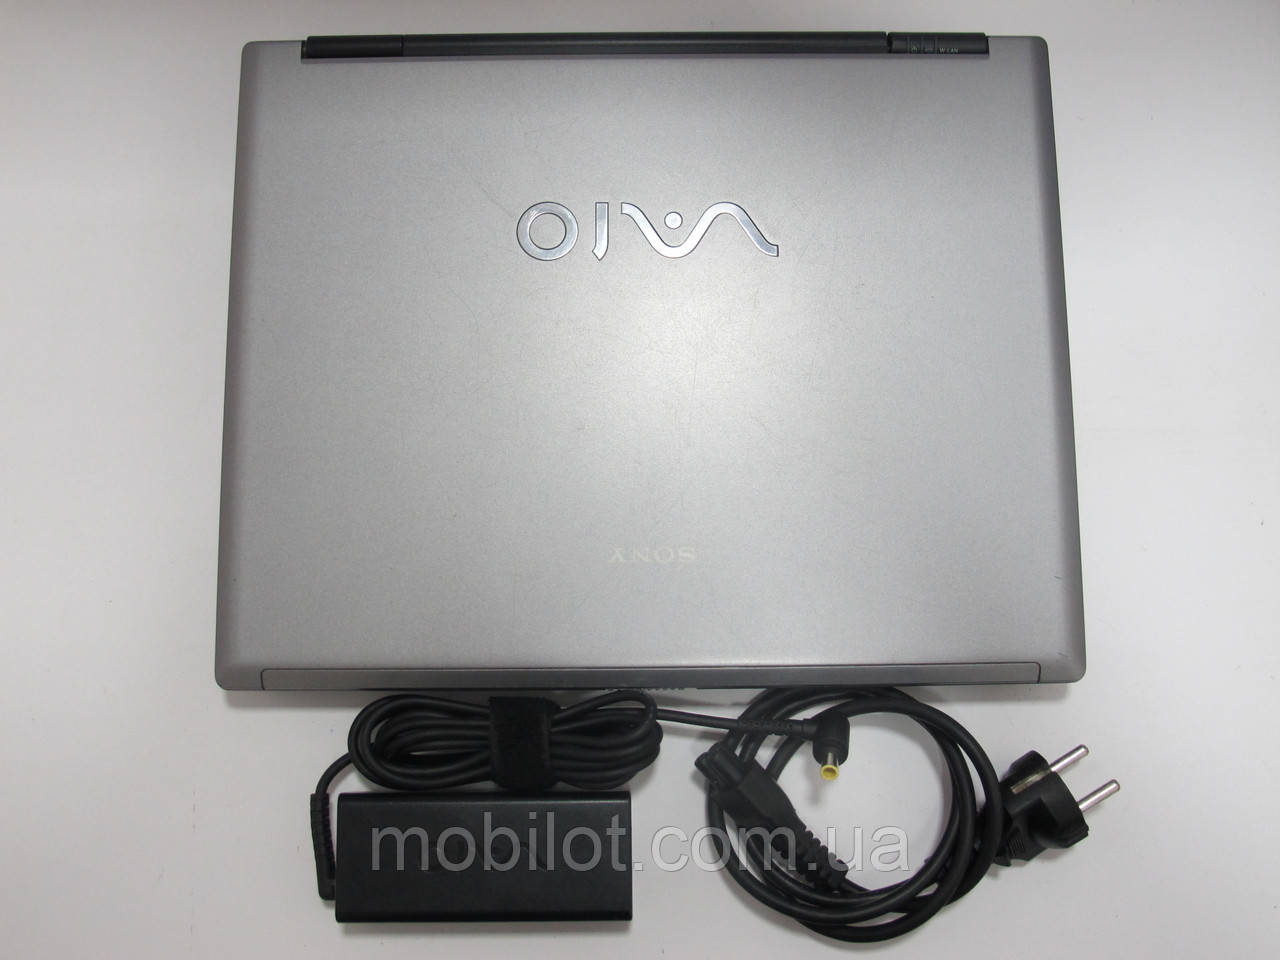 Ноутбук Sony VAIO VGN-B100B (NR-6732)Нет в наличии